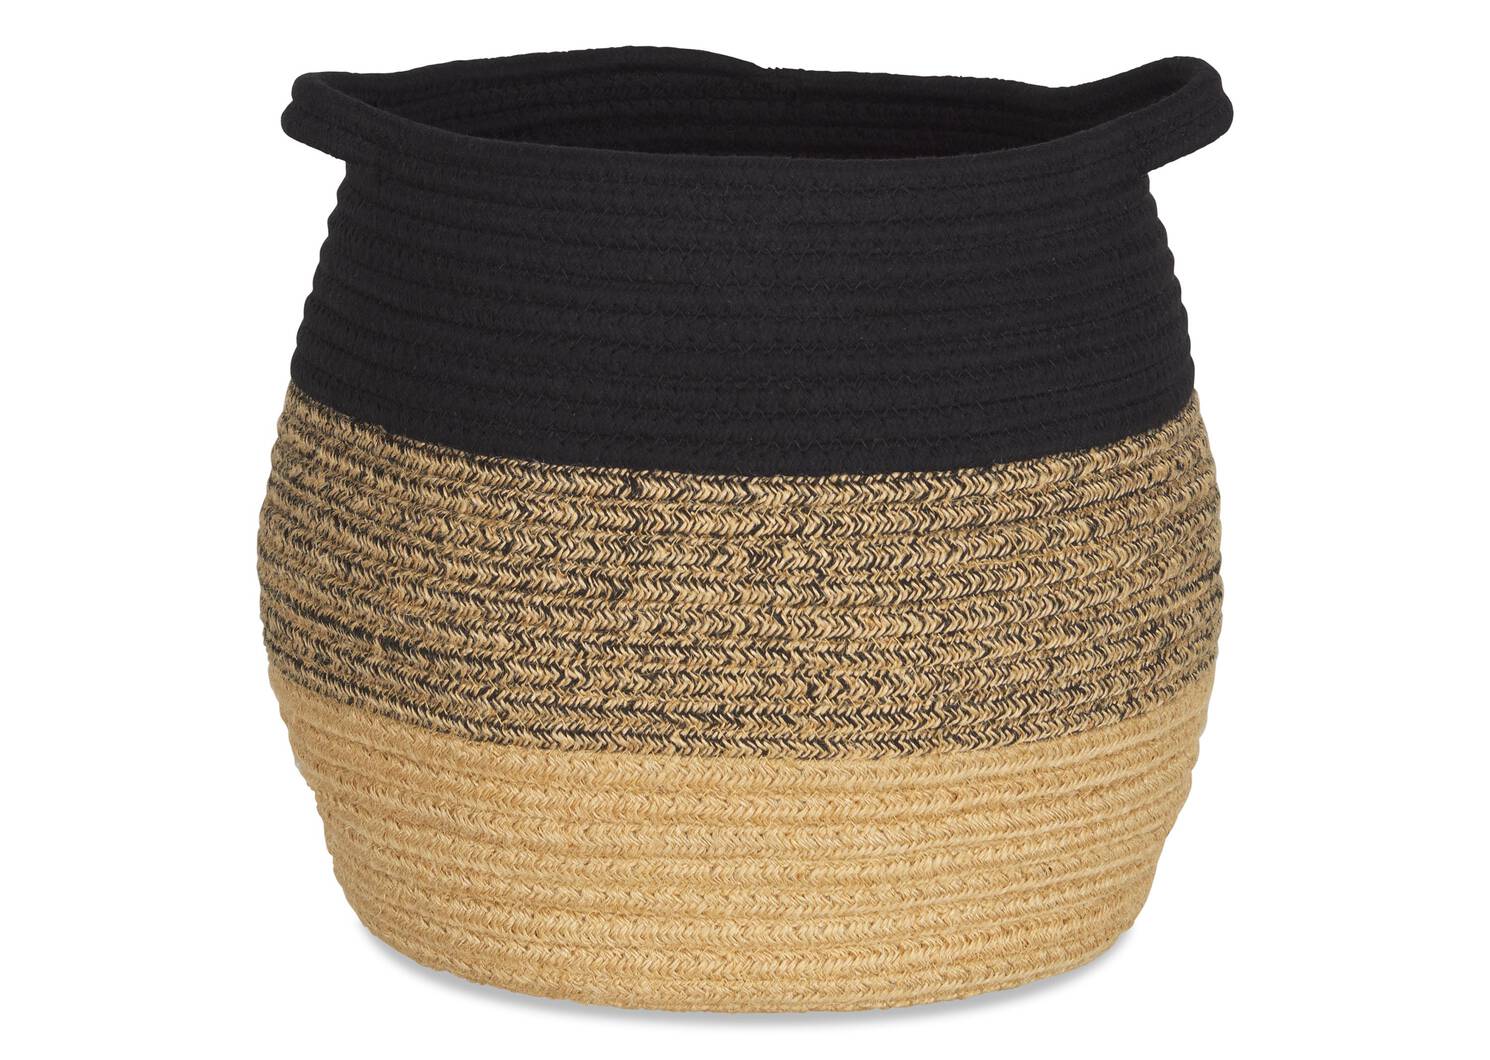 Azibo Basket Medium Black/Natural